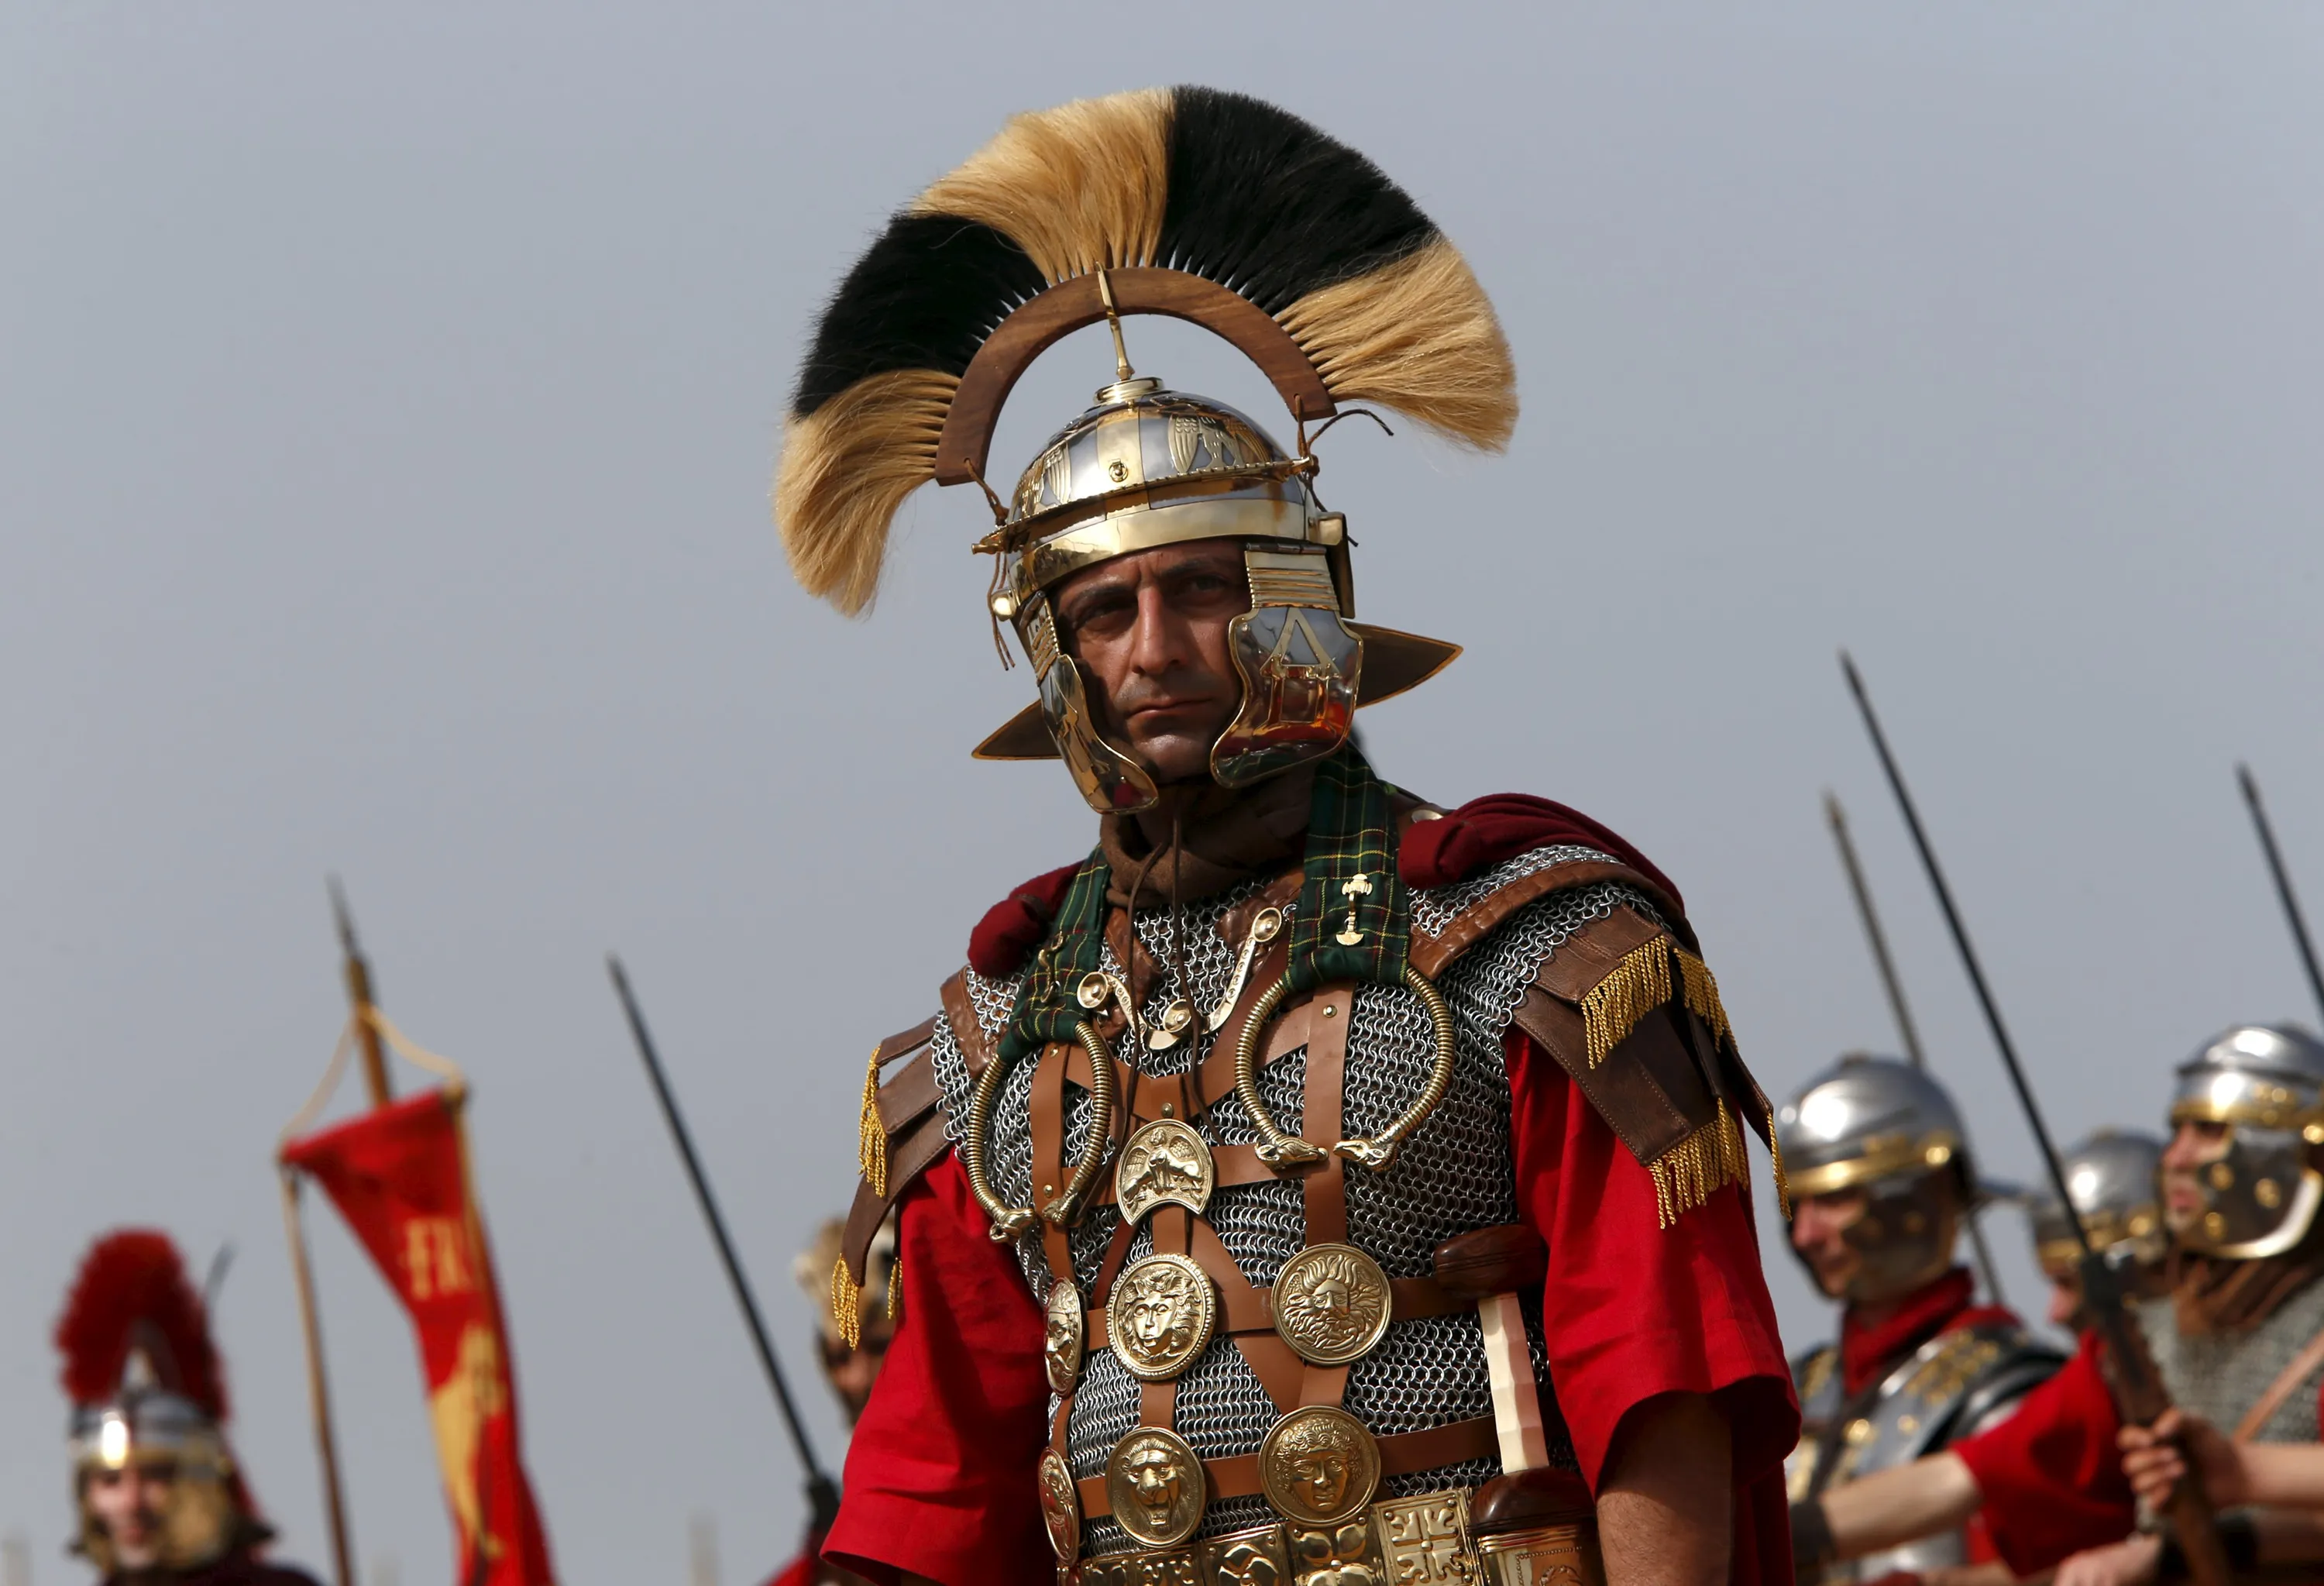 Номер легиона. Римская армия Центурион. Римский легионер. Римский легионер Центурион. Римская Империя Римский Легион.